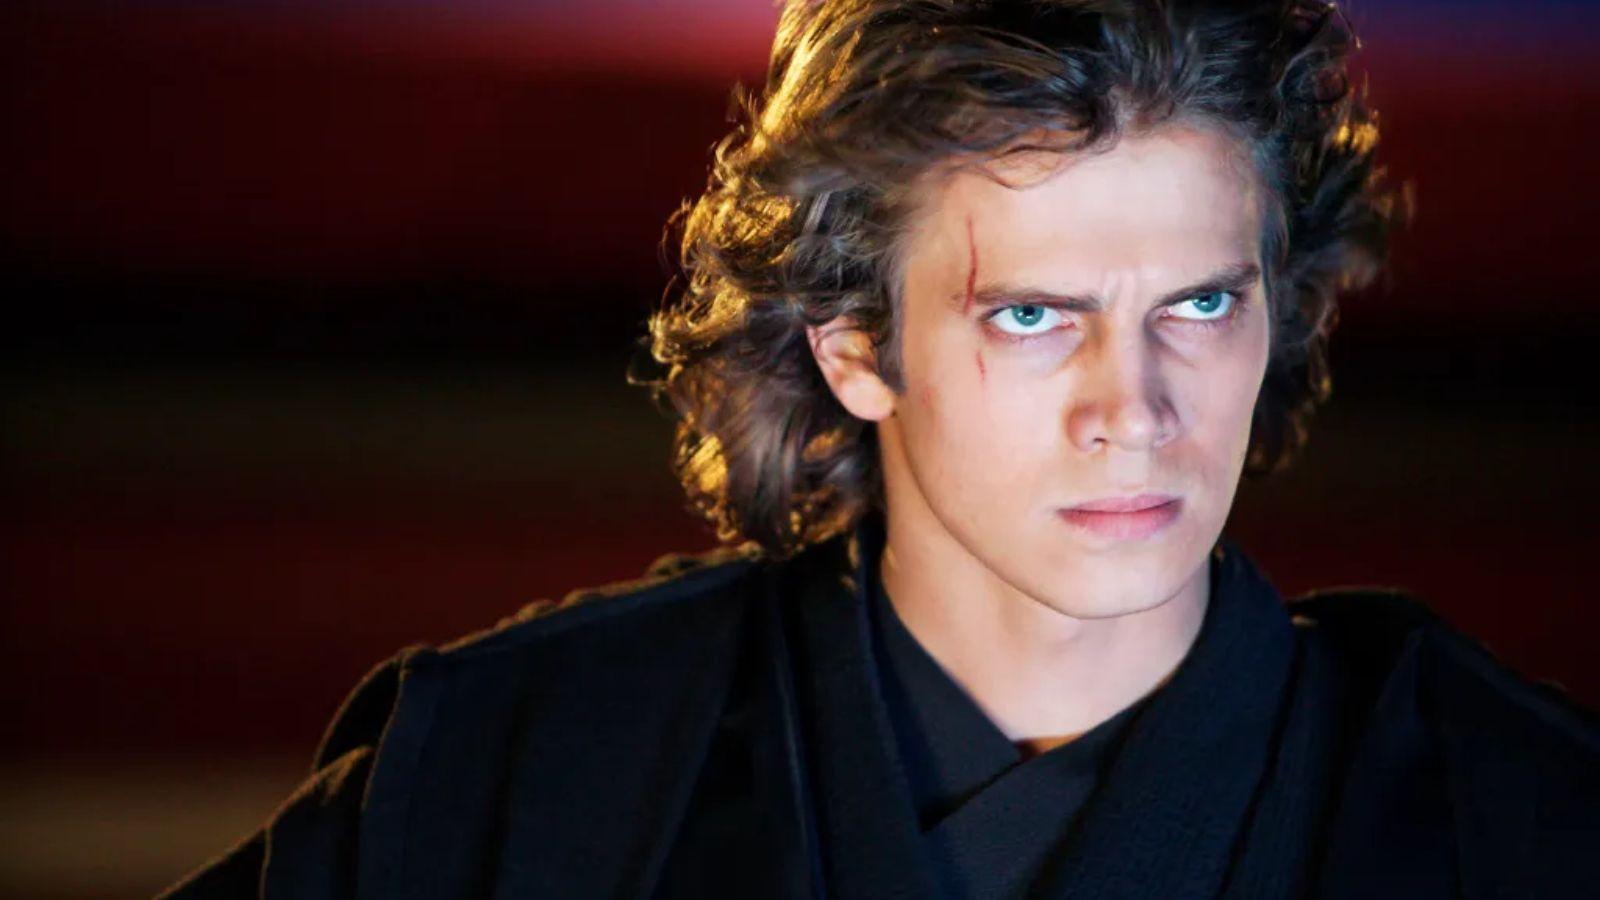 Hayden Christenses as Anakin Skywalker in Revenge of the Sith.